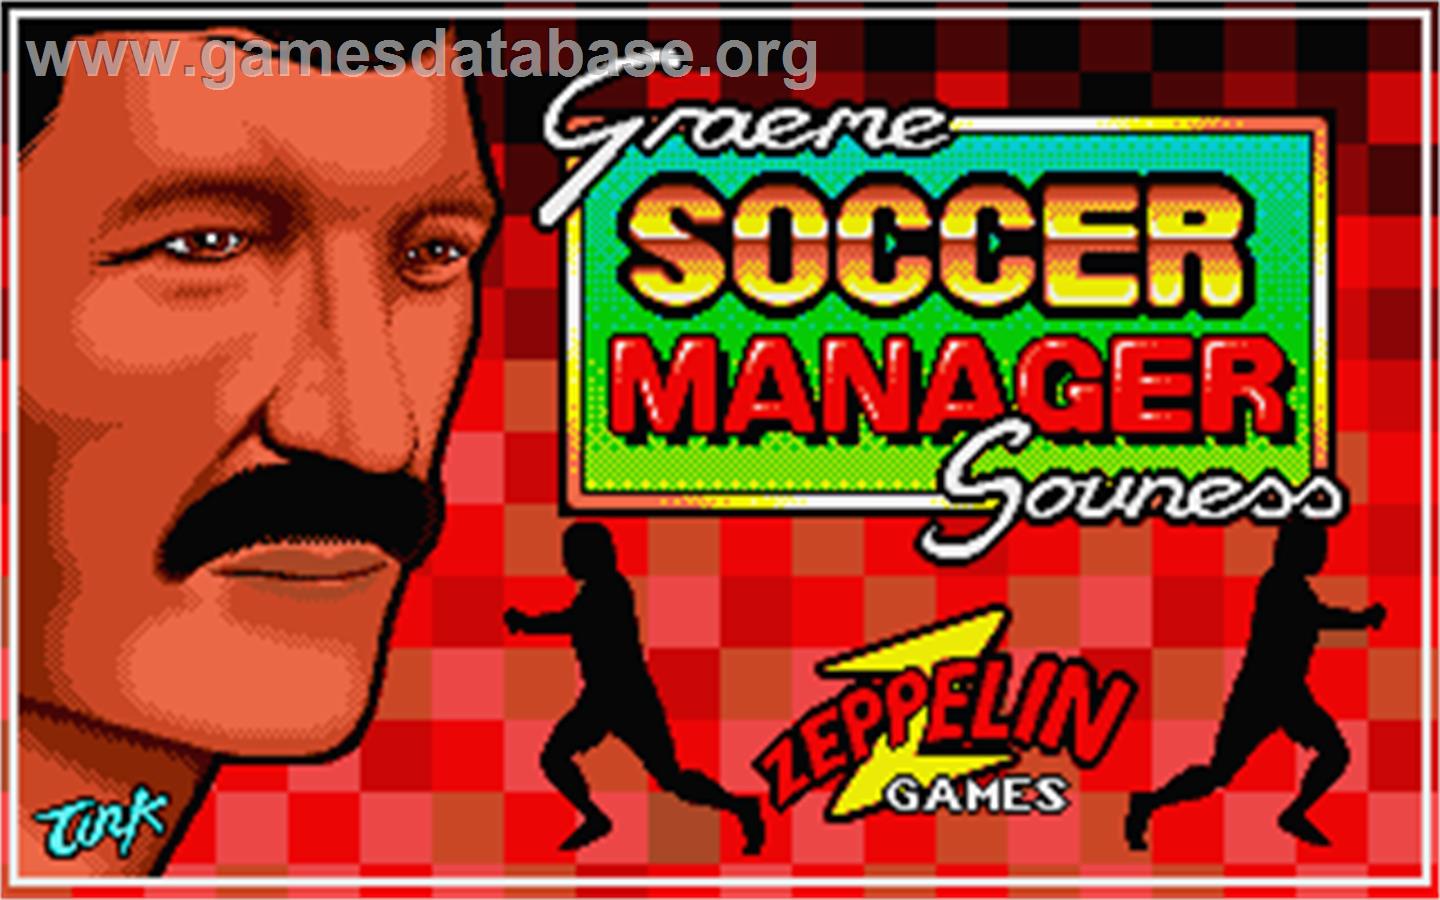 Graeme Souness Soccer Manager - Atari ST - Artwork - Title Screen